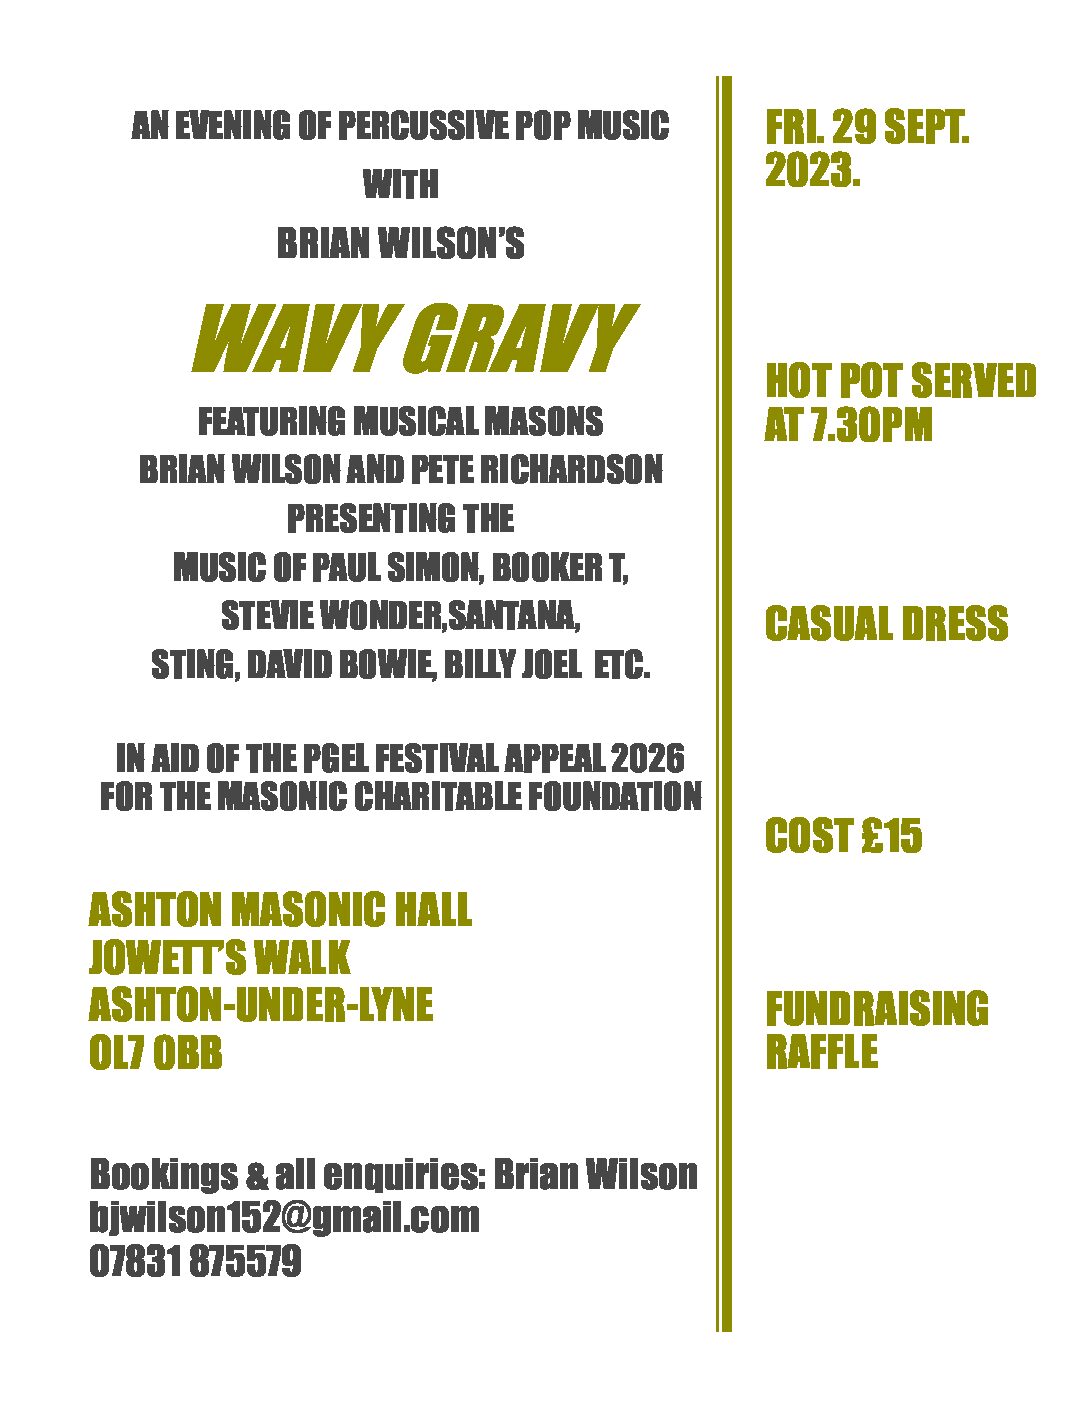 Wavy Gravy evening of music at Ashton Masonic Hall